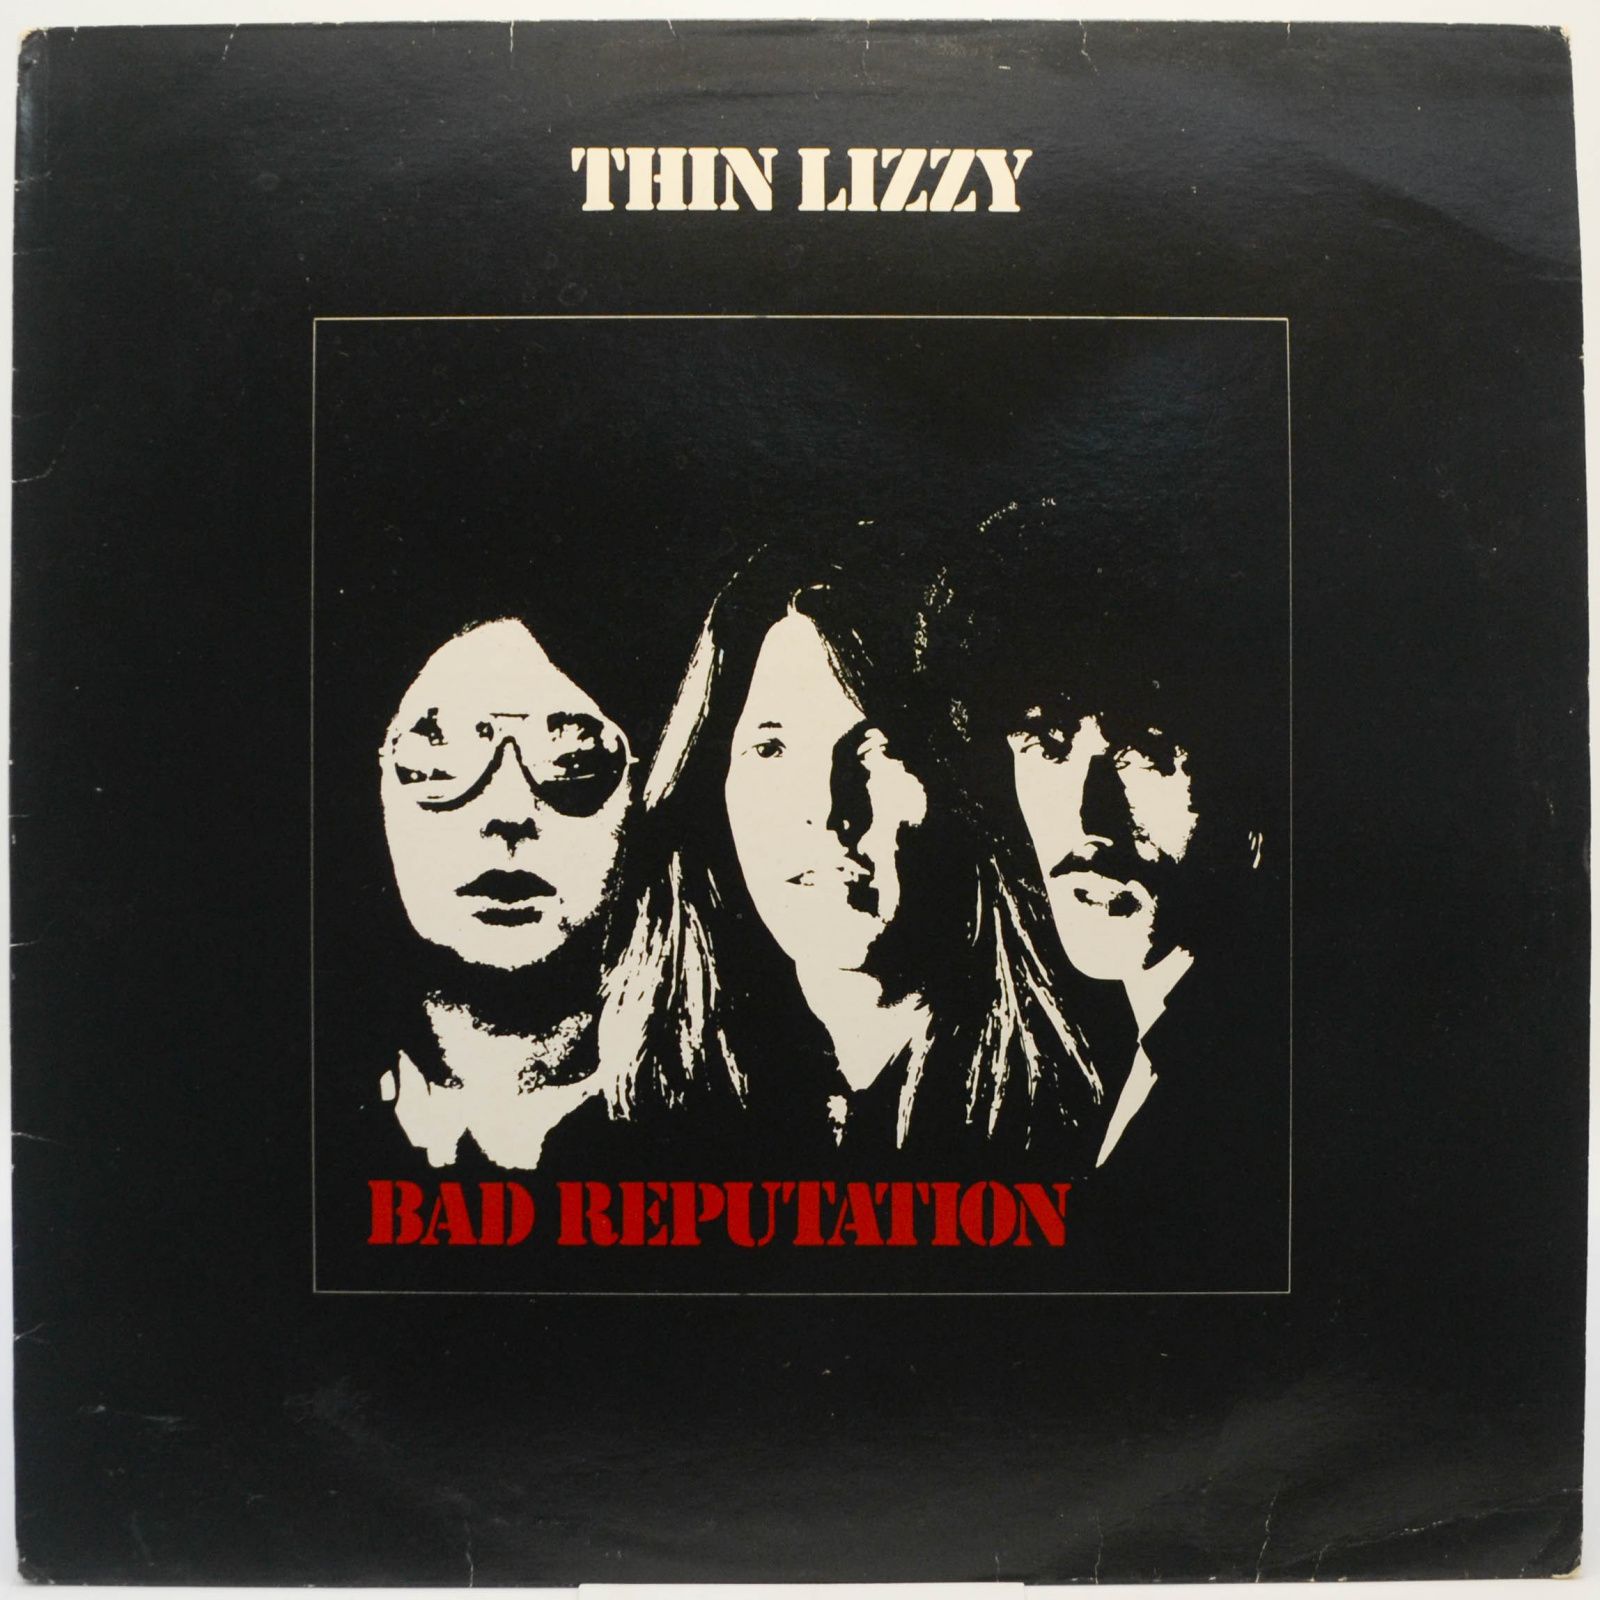 Thin Lizzy — Bad Reputation (1-st, UK), 1977